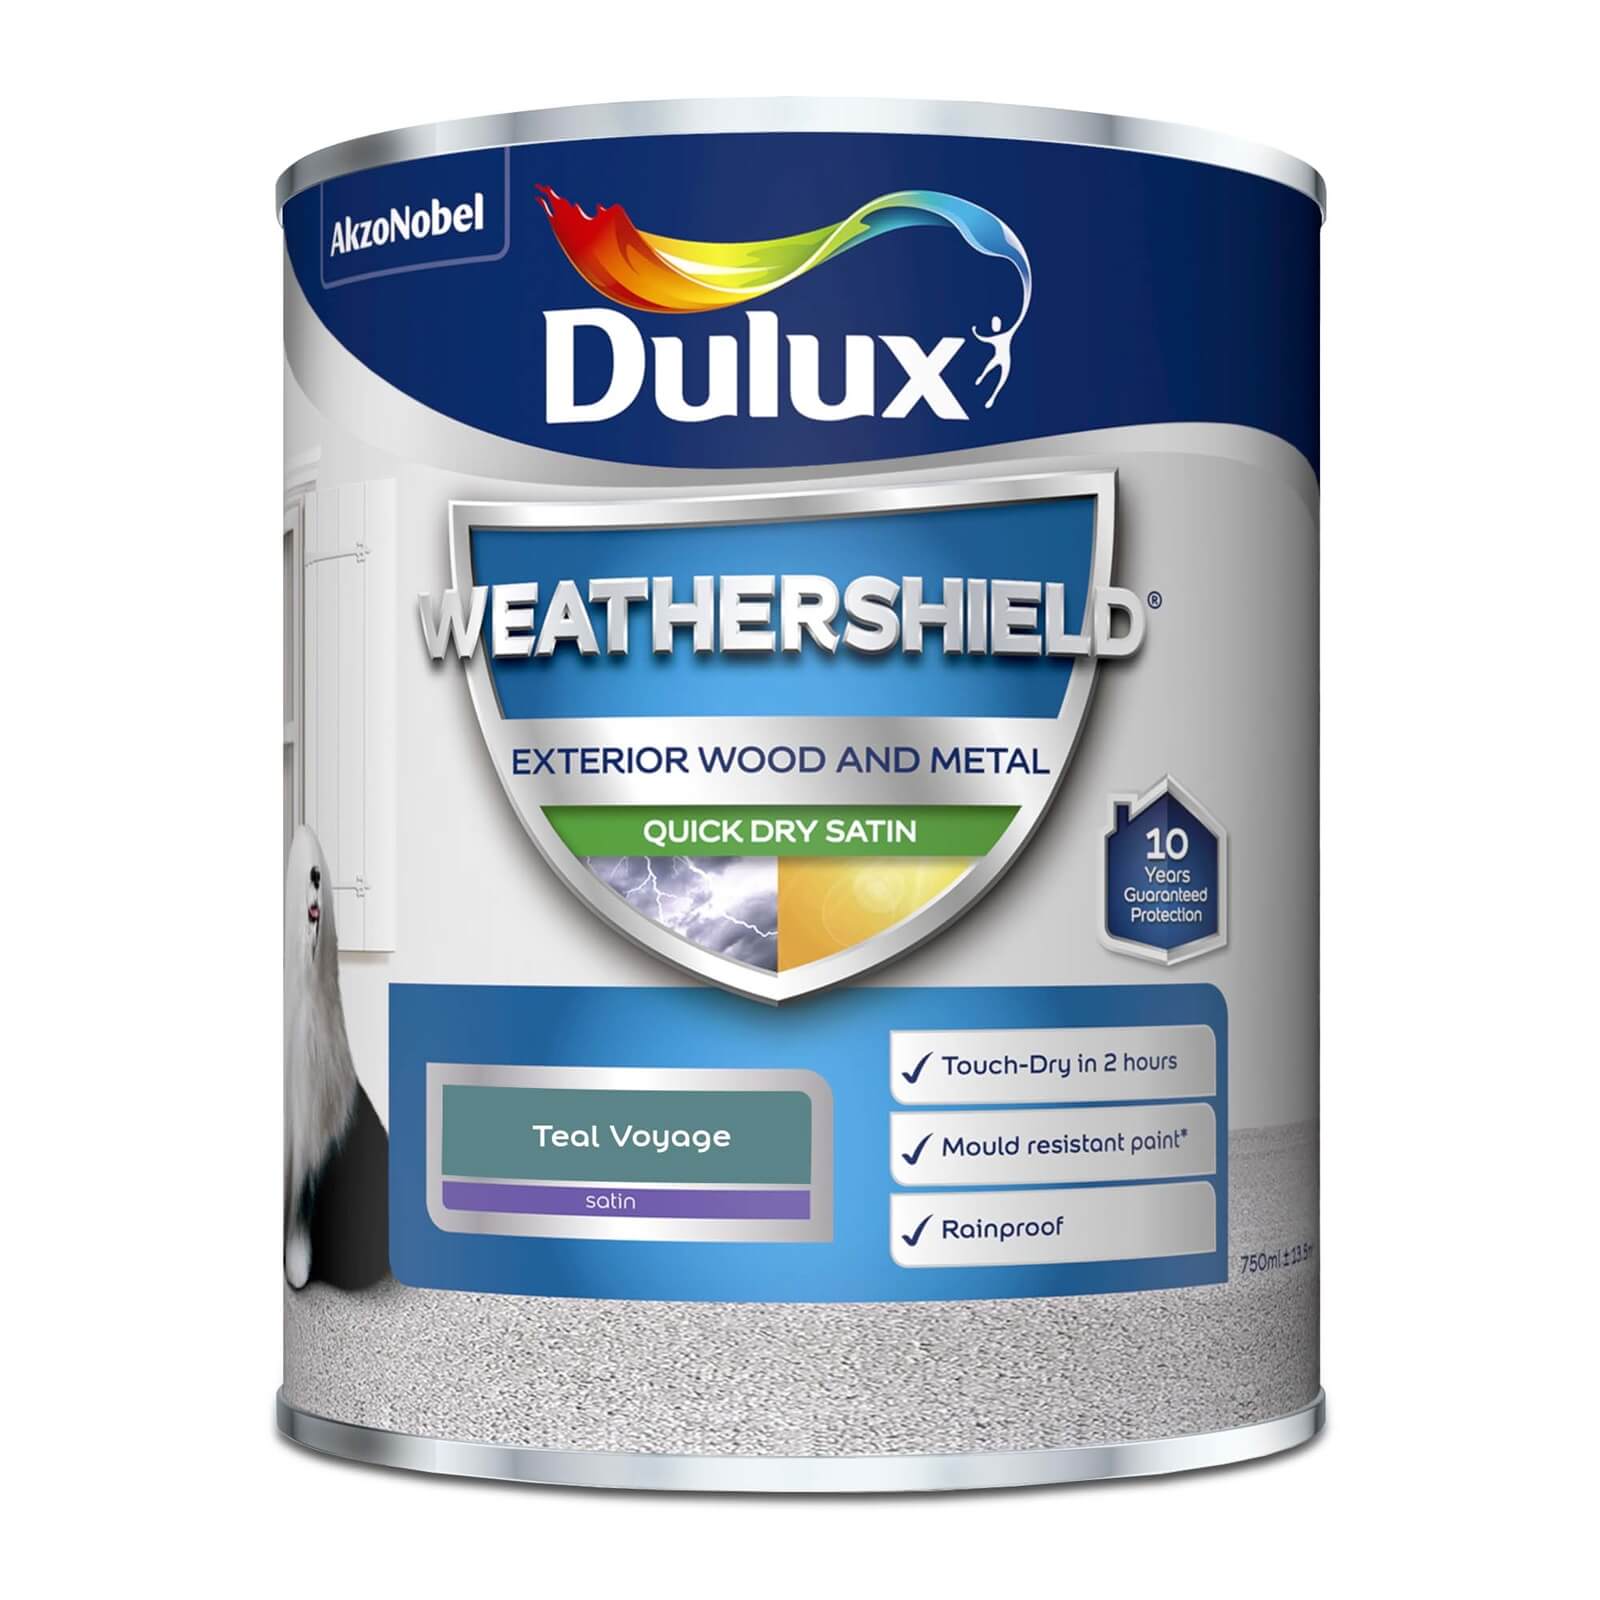 Dulux Weathershield Quick Dry Satin Paint Teal Voyage - 750ml